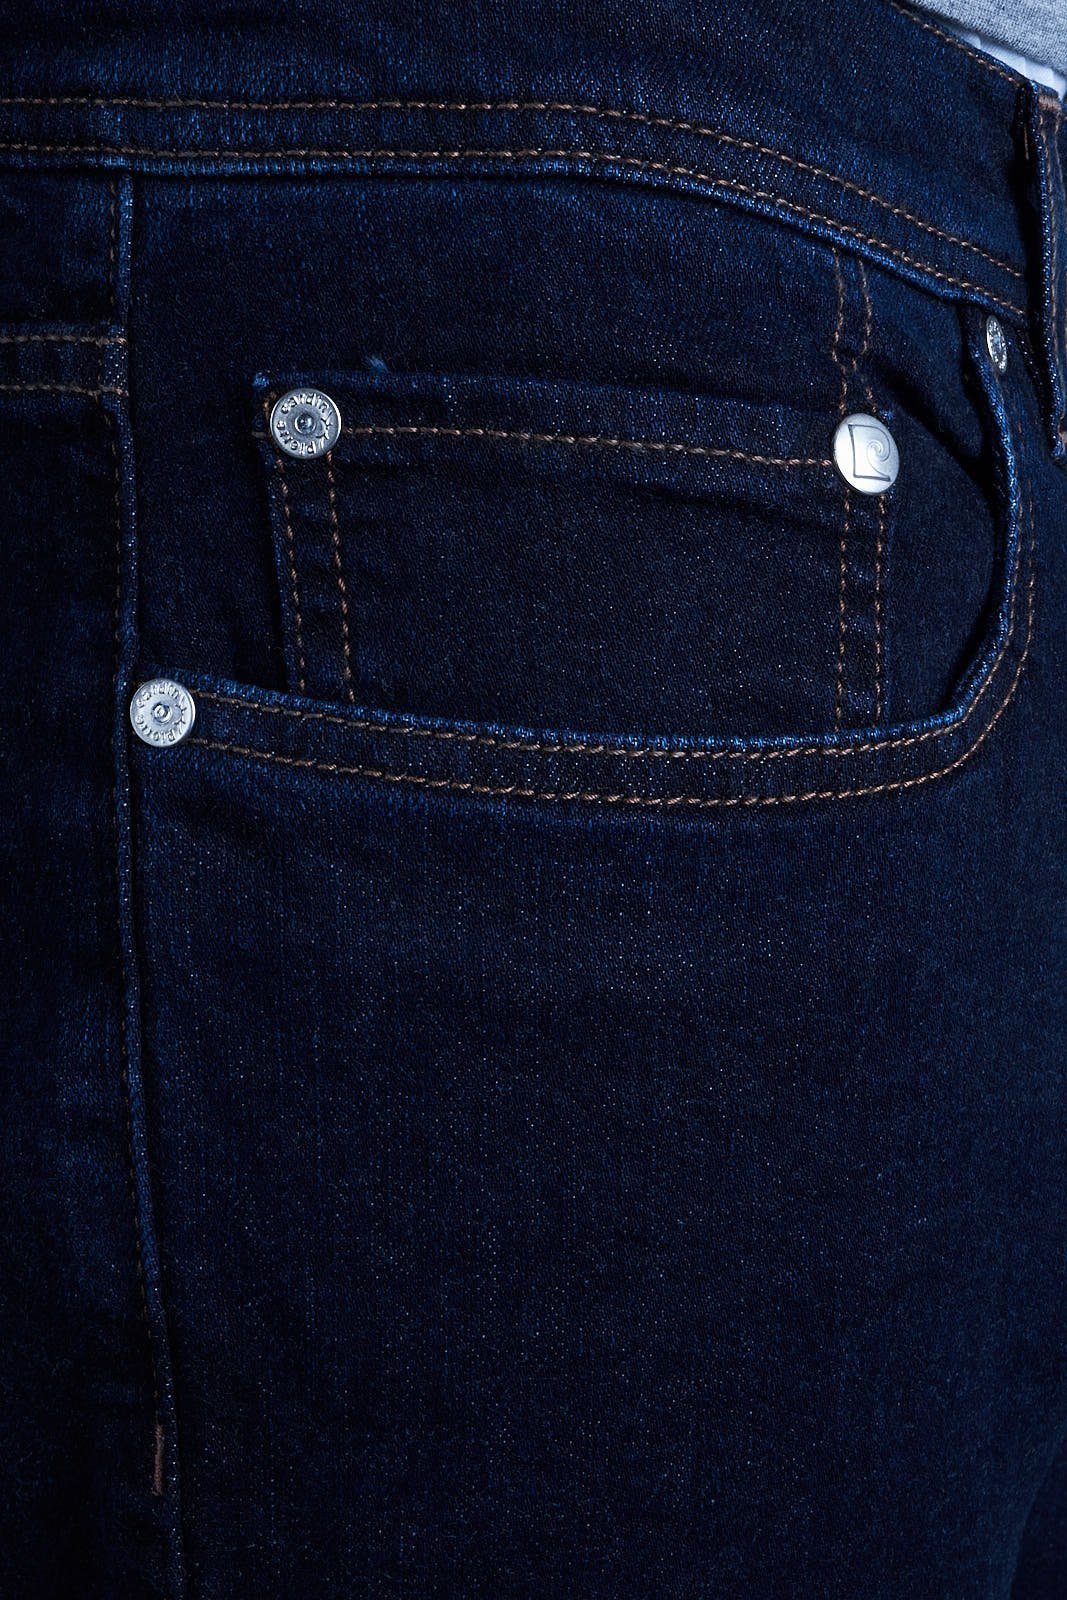 Pierre Cardin Straight-Jeans Blue Dark